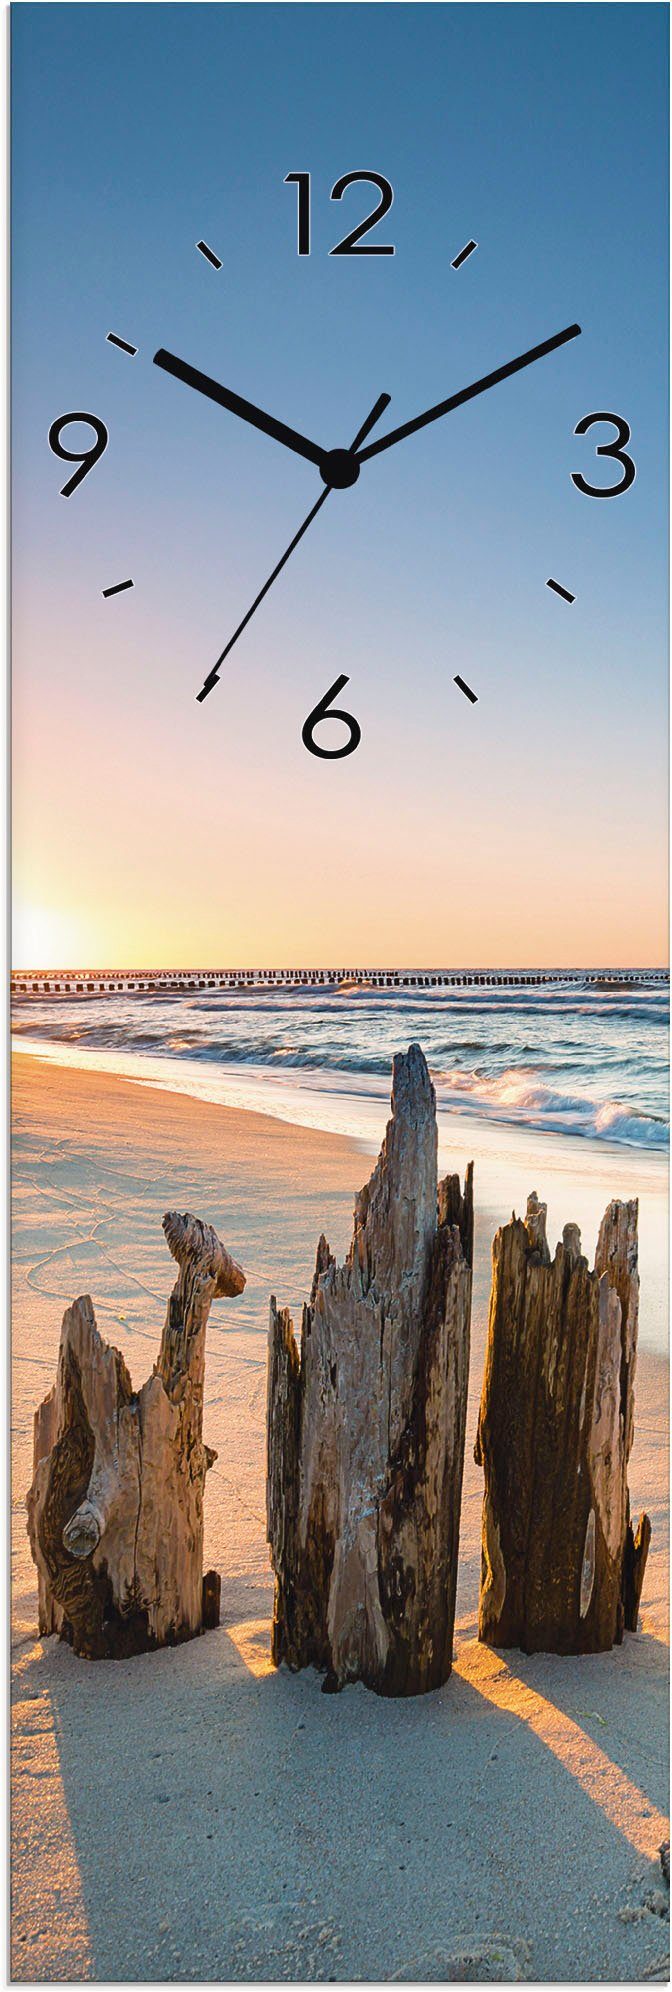 Artland Wanduhr Glasuhr Sonnenuntergang Strand Wellenbrecher (wahlweise mit  Quarz- oder Funkuhrwerk, lautlos ohne Tickgeräusche) | Wanduhren